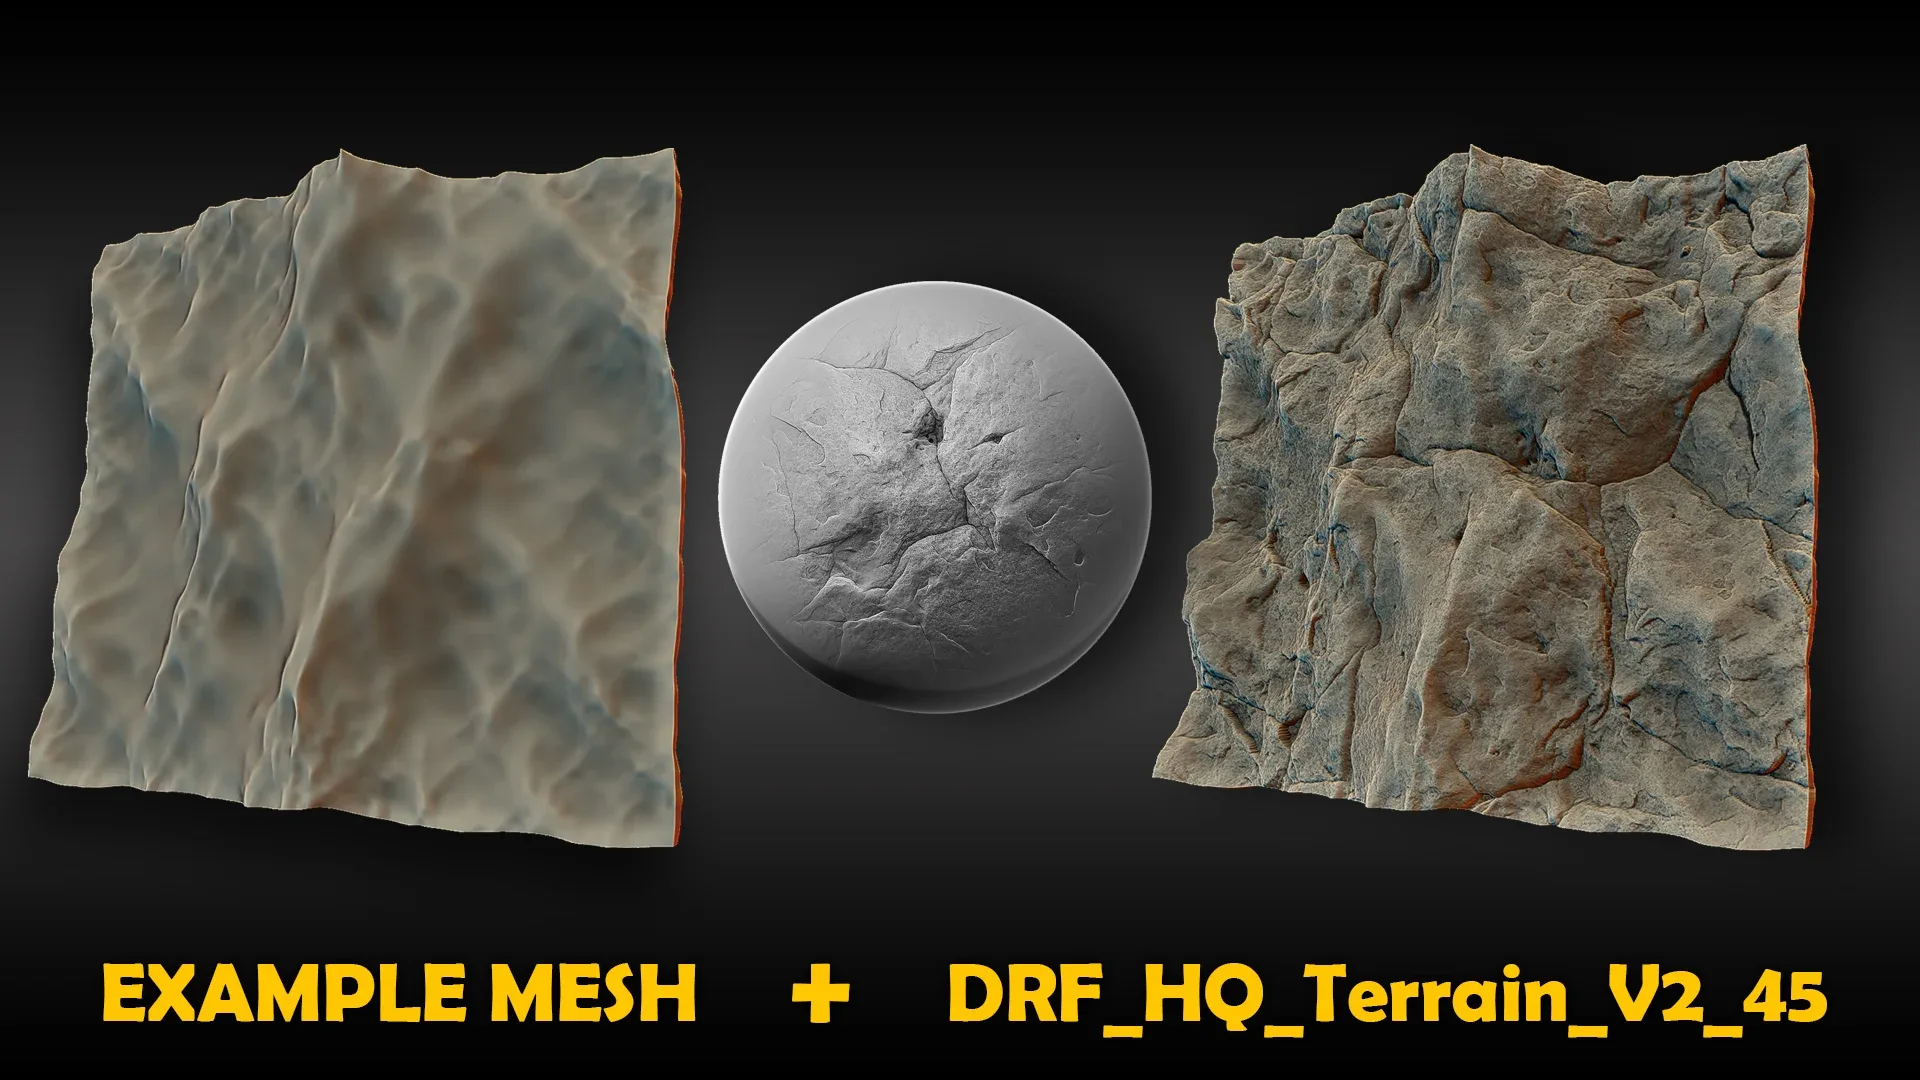 Ultra HQ Terrain / Rock Seamless Sculpt Zbrush brushes + Alphas (Blender, Substance, etc.) Vol.2